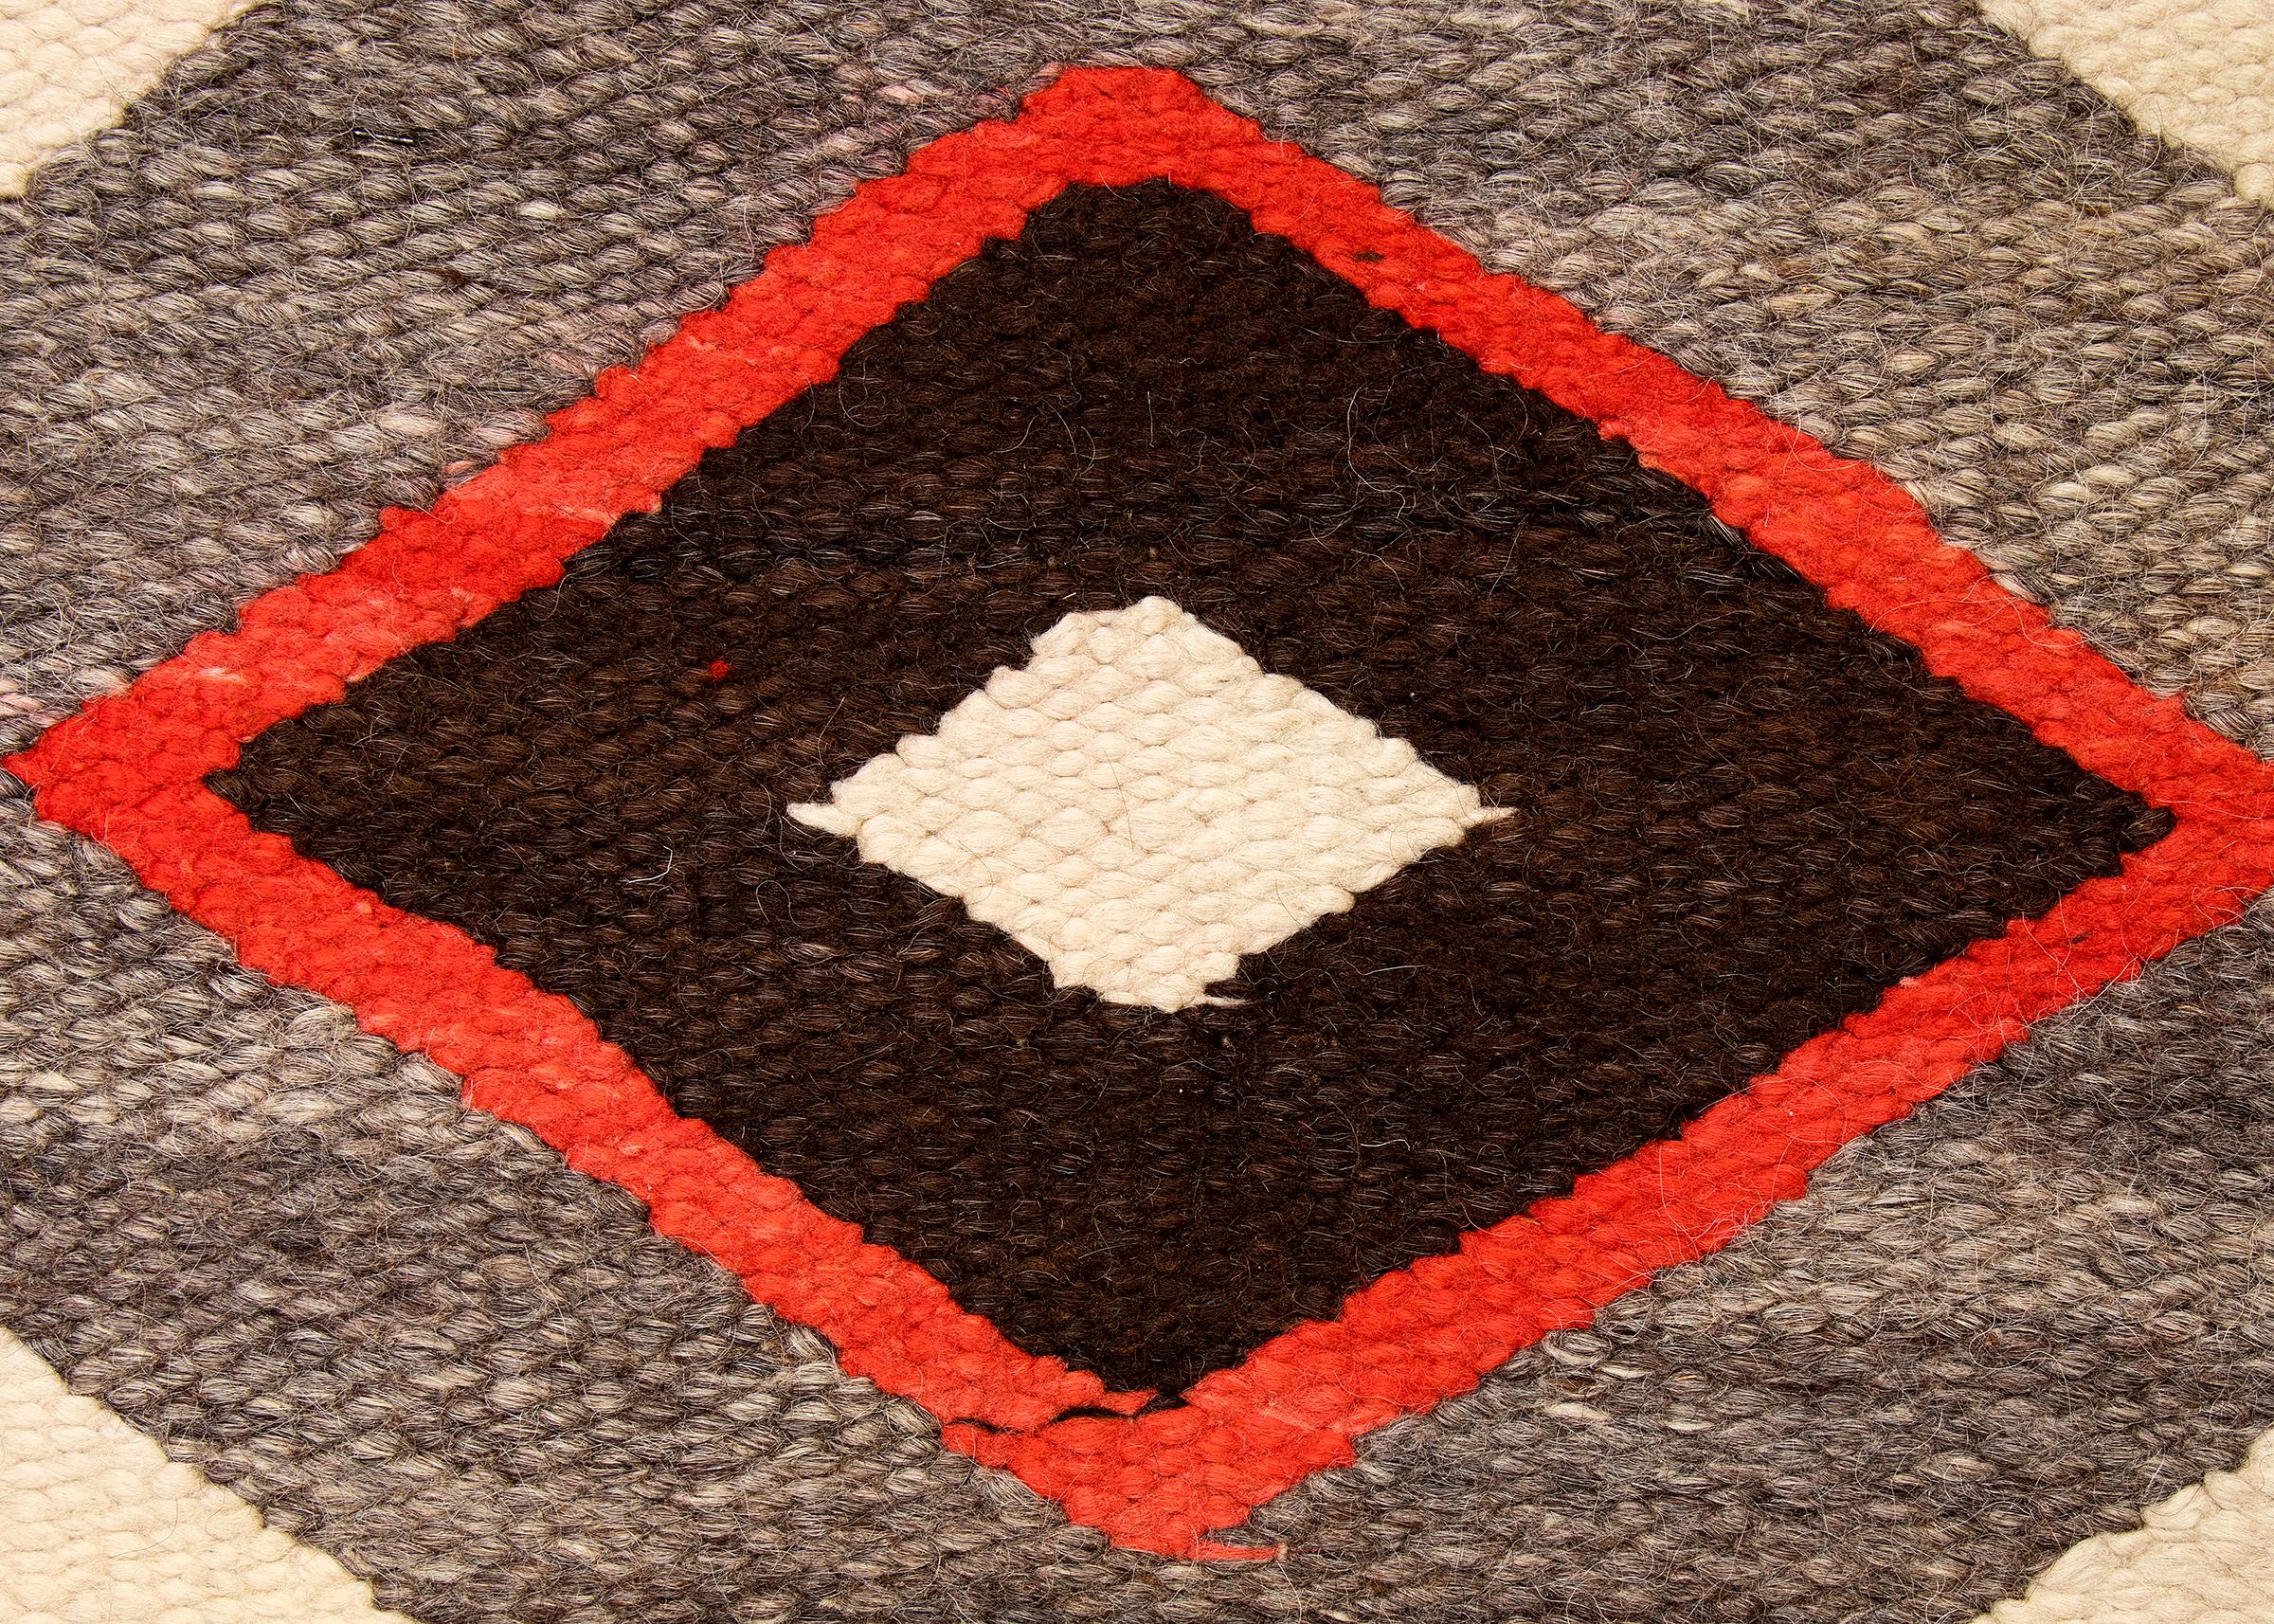 Native American Vintage Navajo Rug, Trading Post Era Southwestern Weaving, Red Brown Black White For Sale